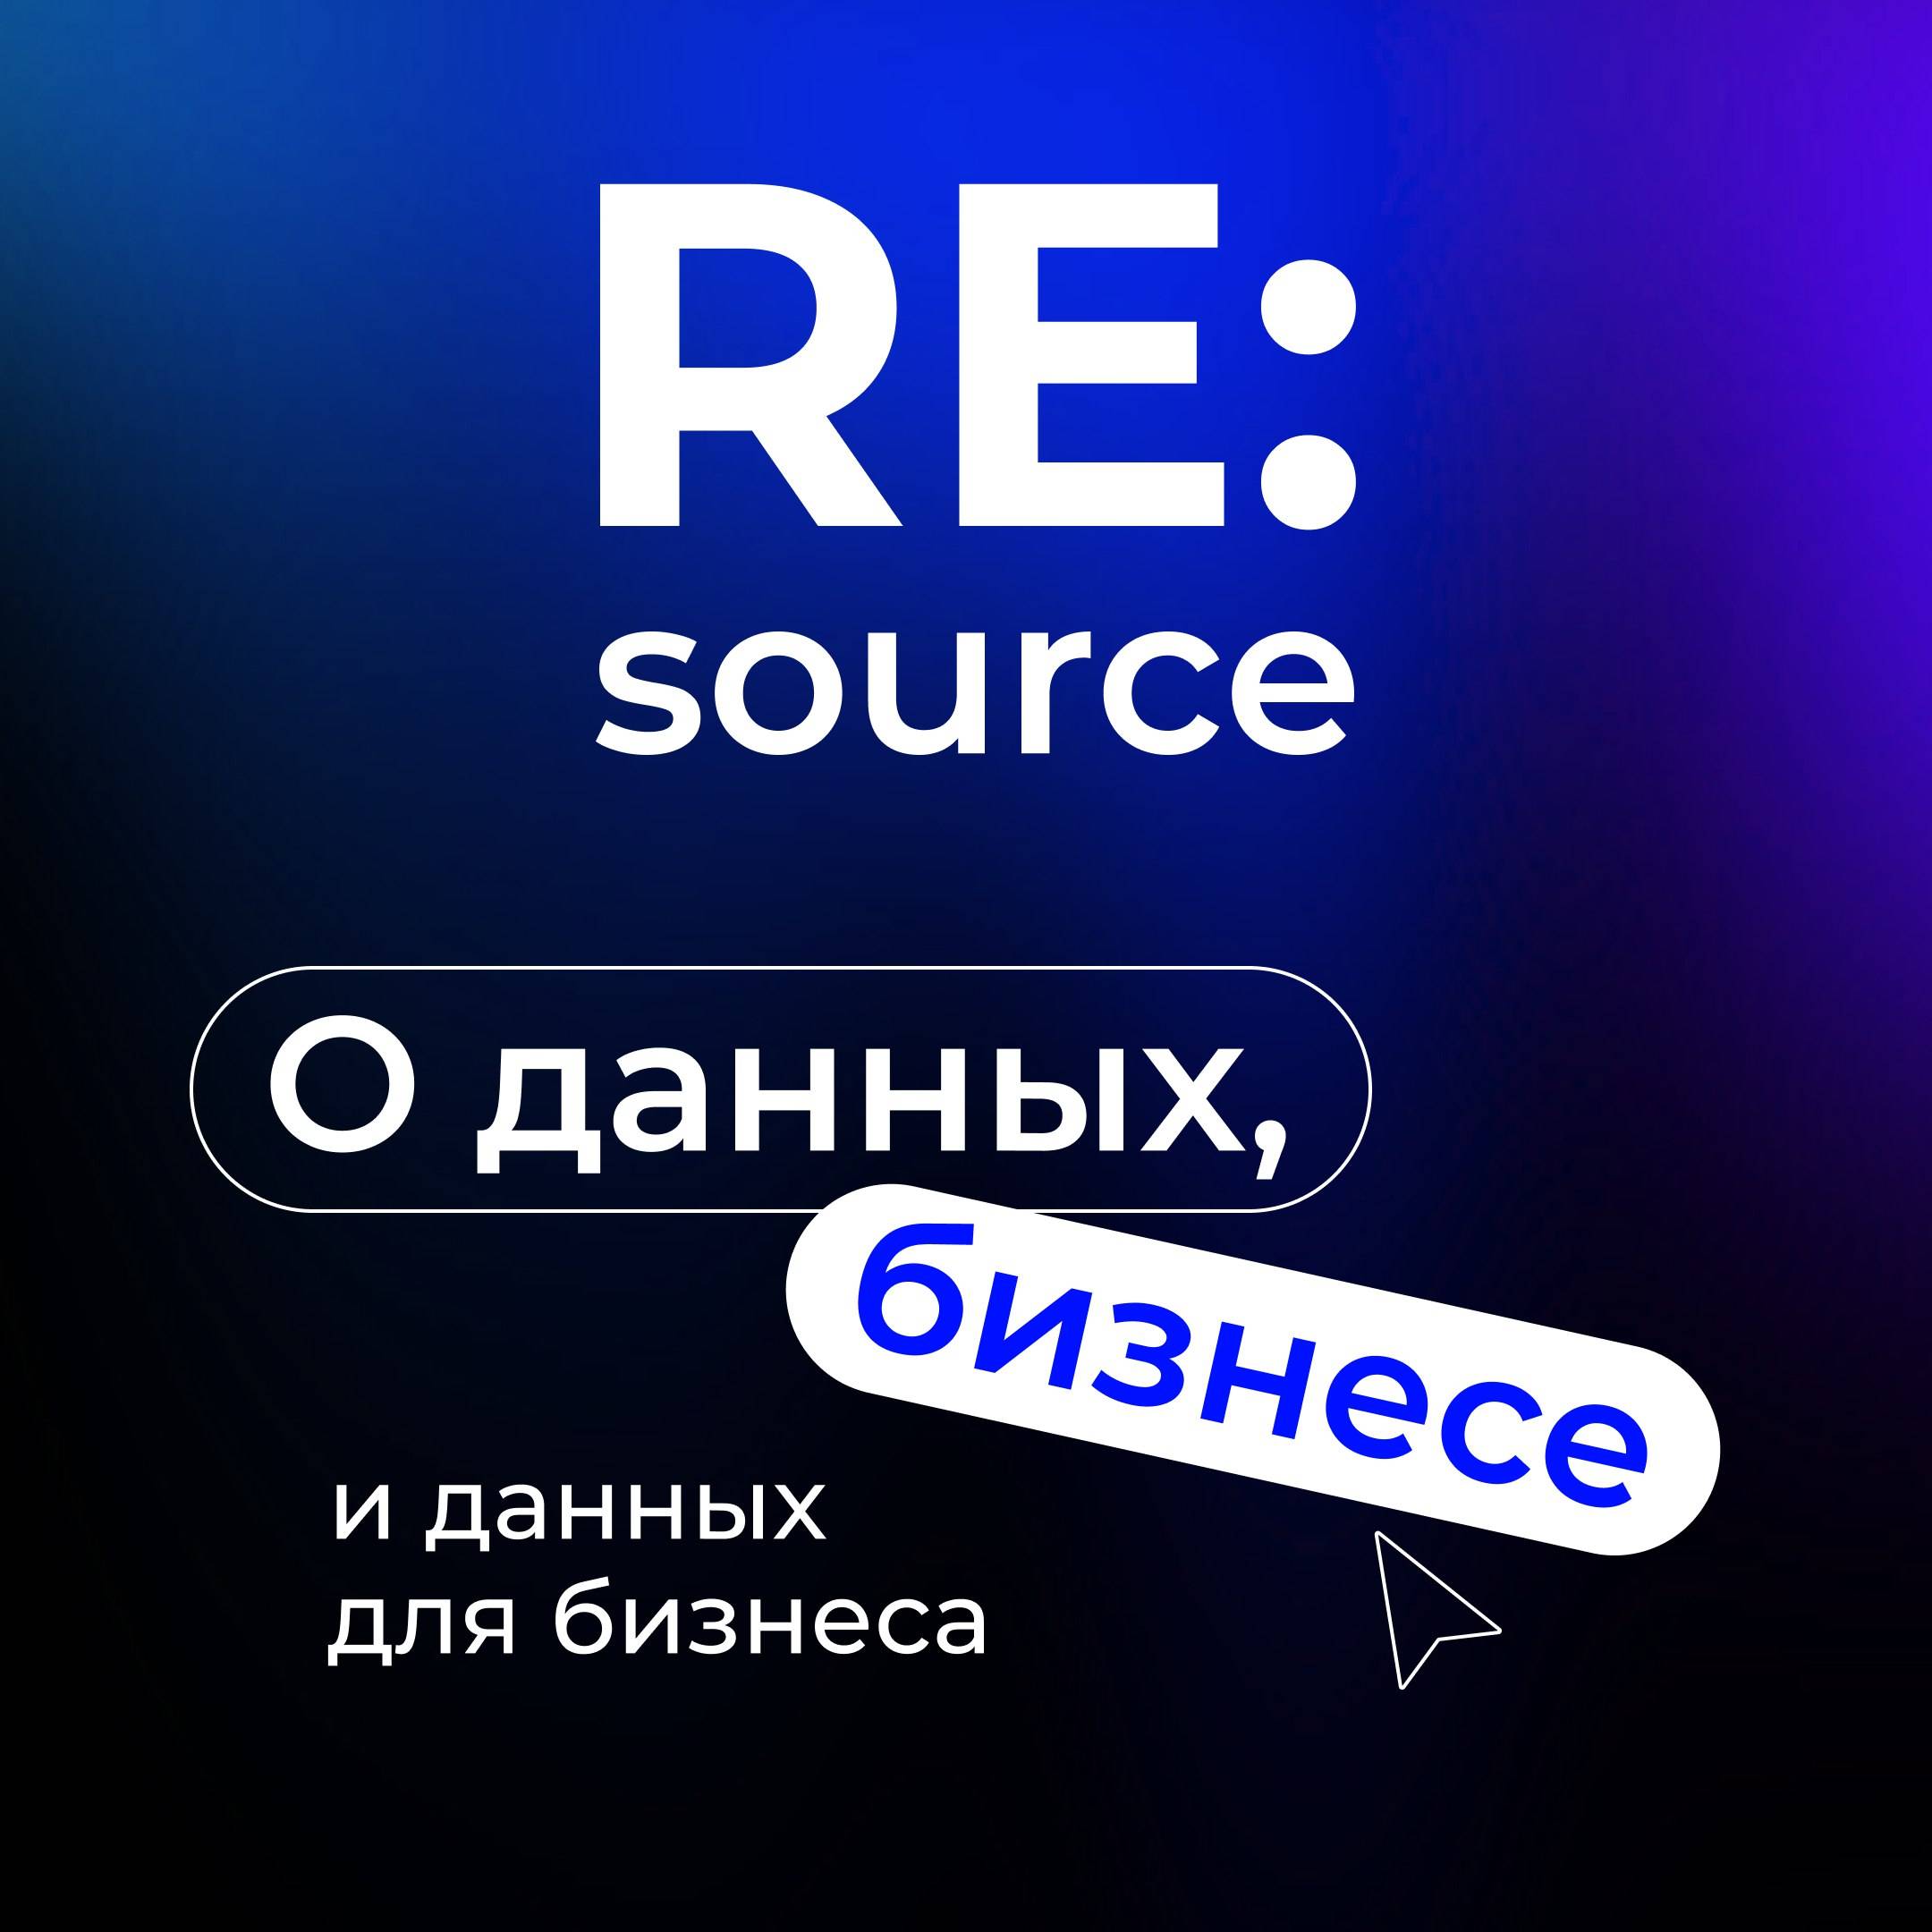 https://pic.rutubelist.ru/user/fc/bf/fcbfee65e6cae6ae3227606c61adad45.jpg